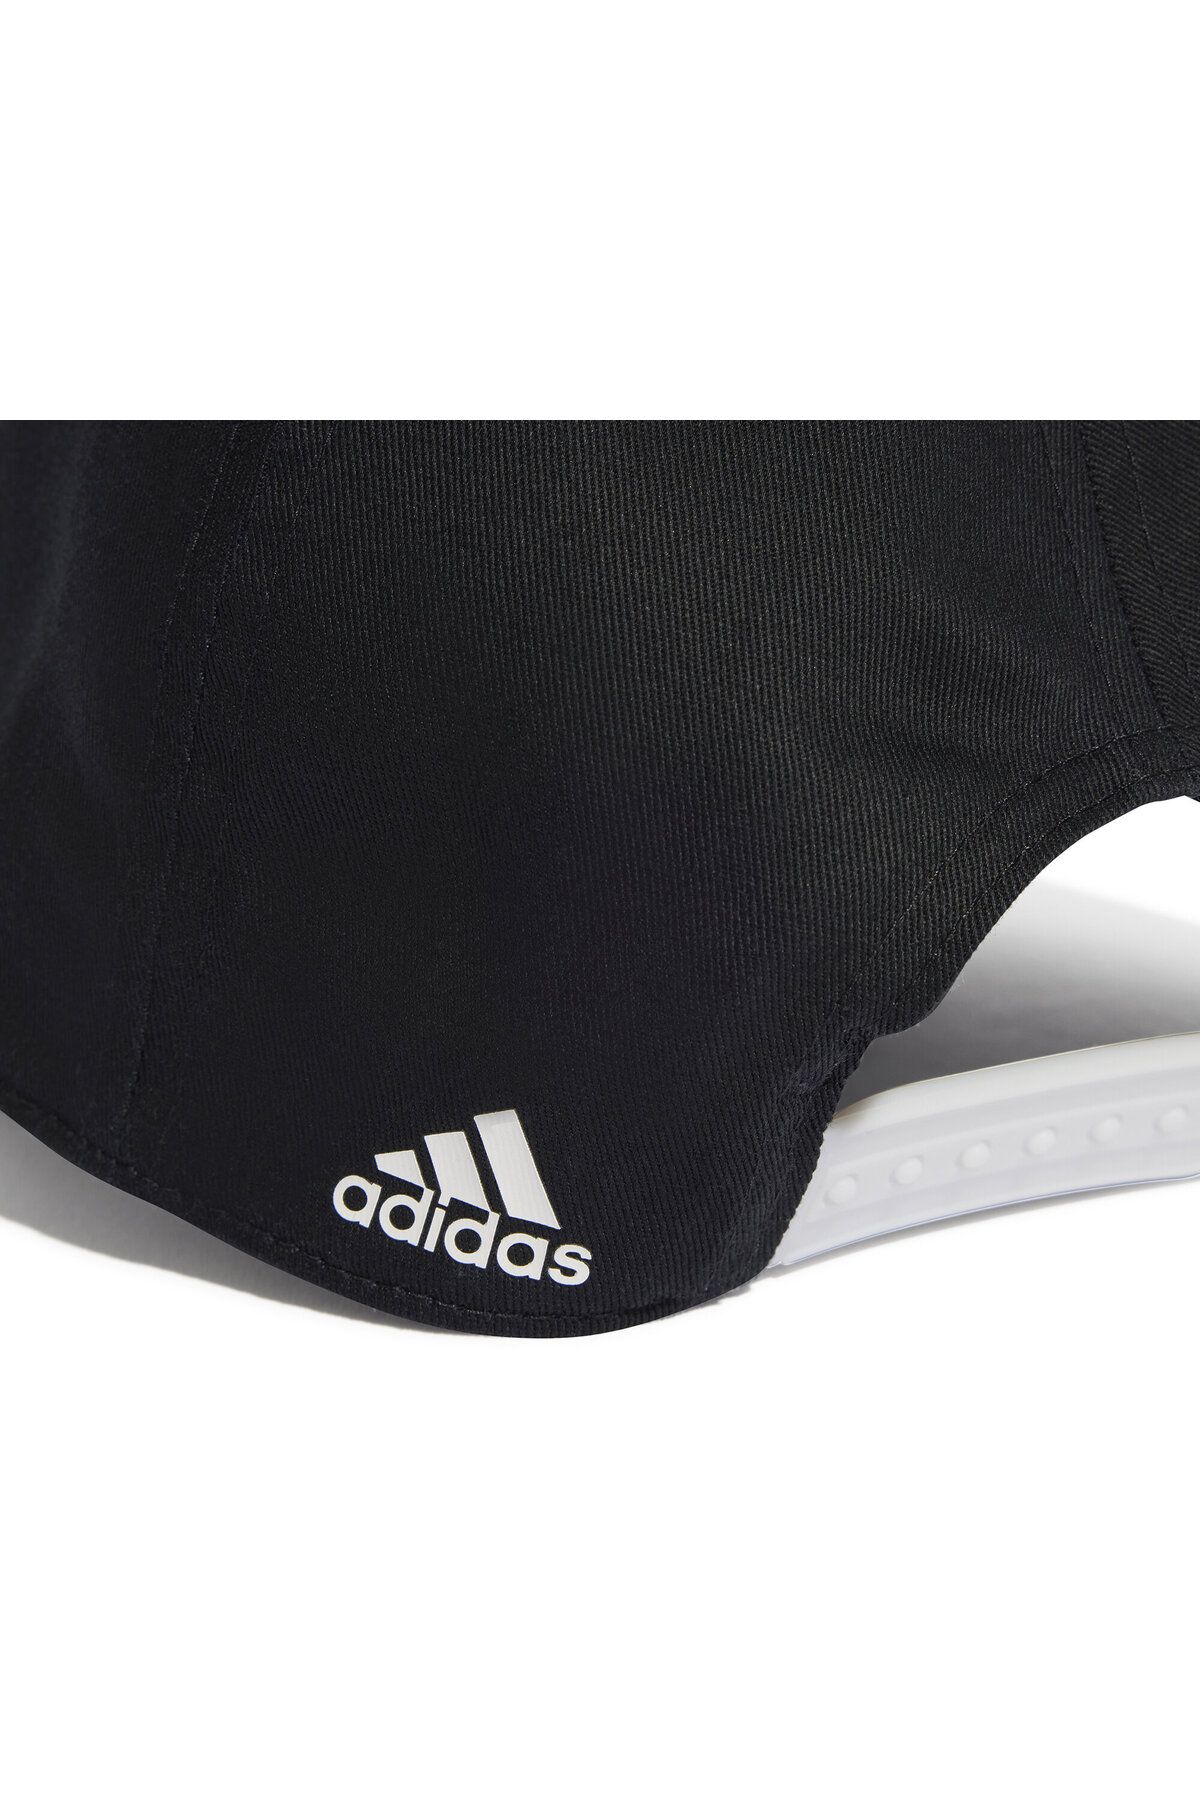 adidas کلاه ورزشی روزانه ساده بیسبال تک جنسیتی قابل تنظیم از پشت